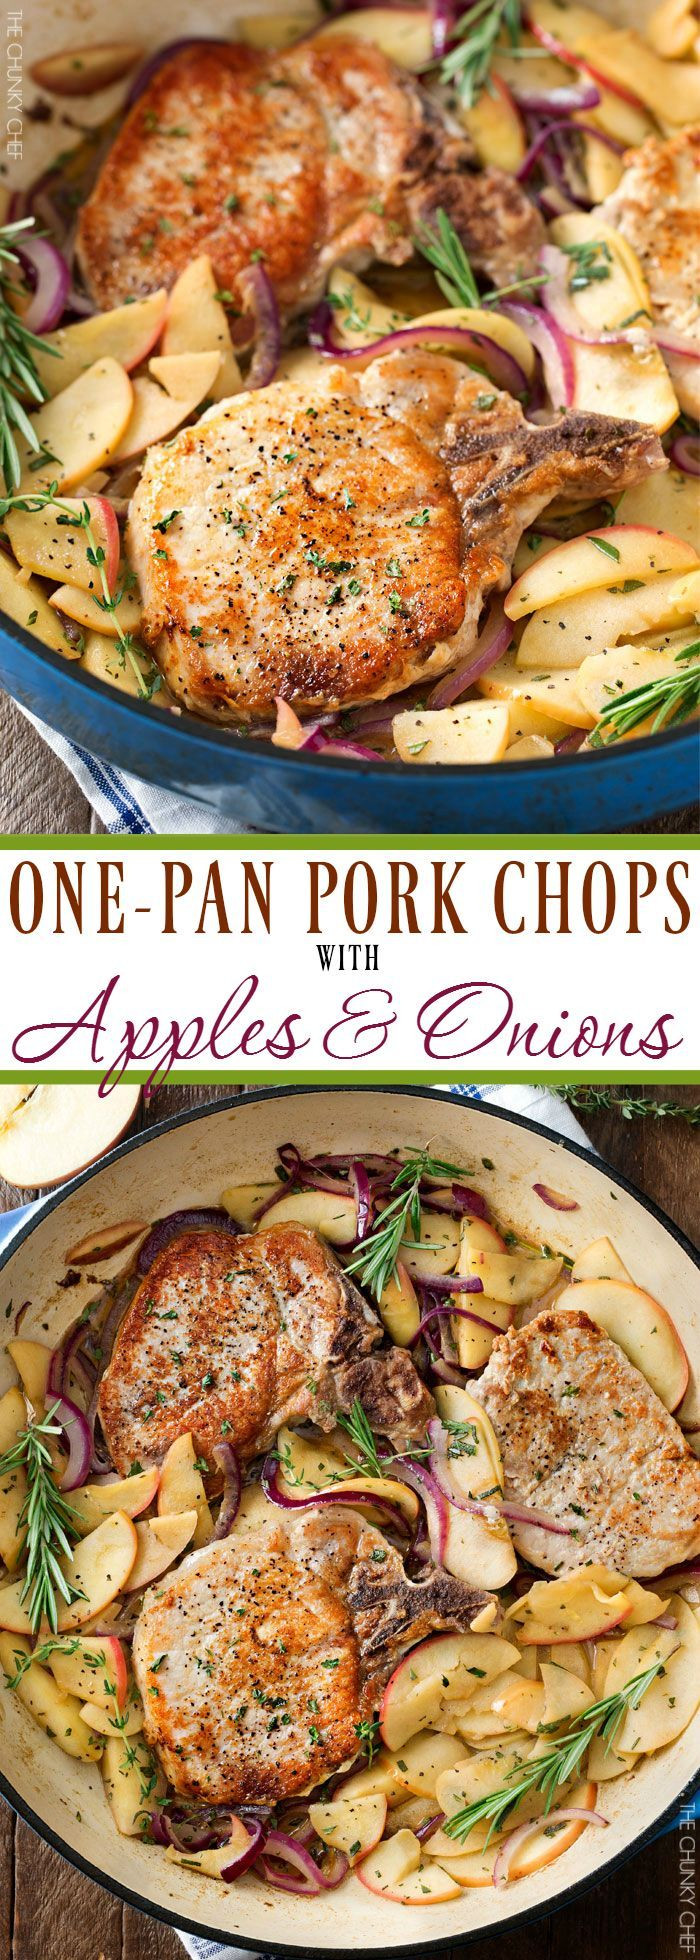 Heart Healthy Pork Chop Recipes
 Best 25 Fall ideas on Pinterest